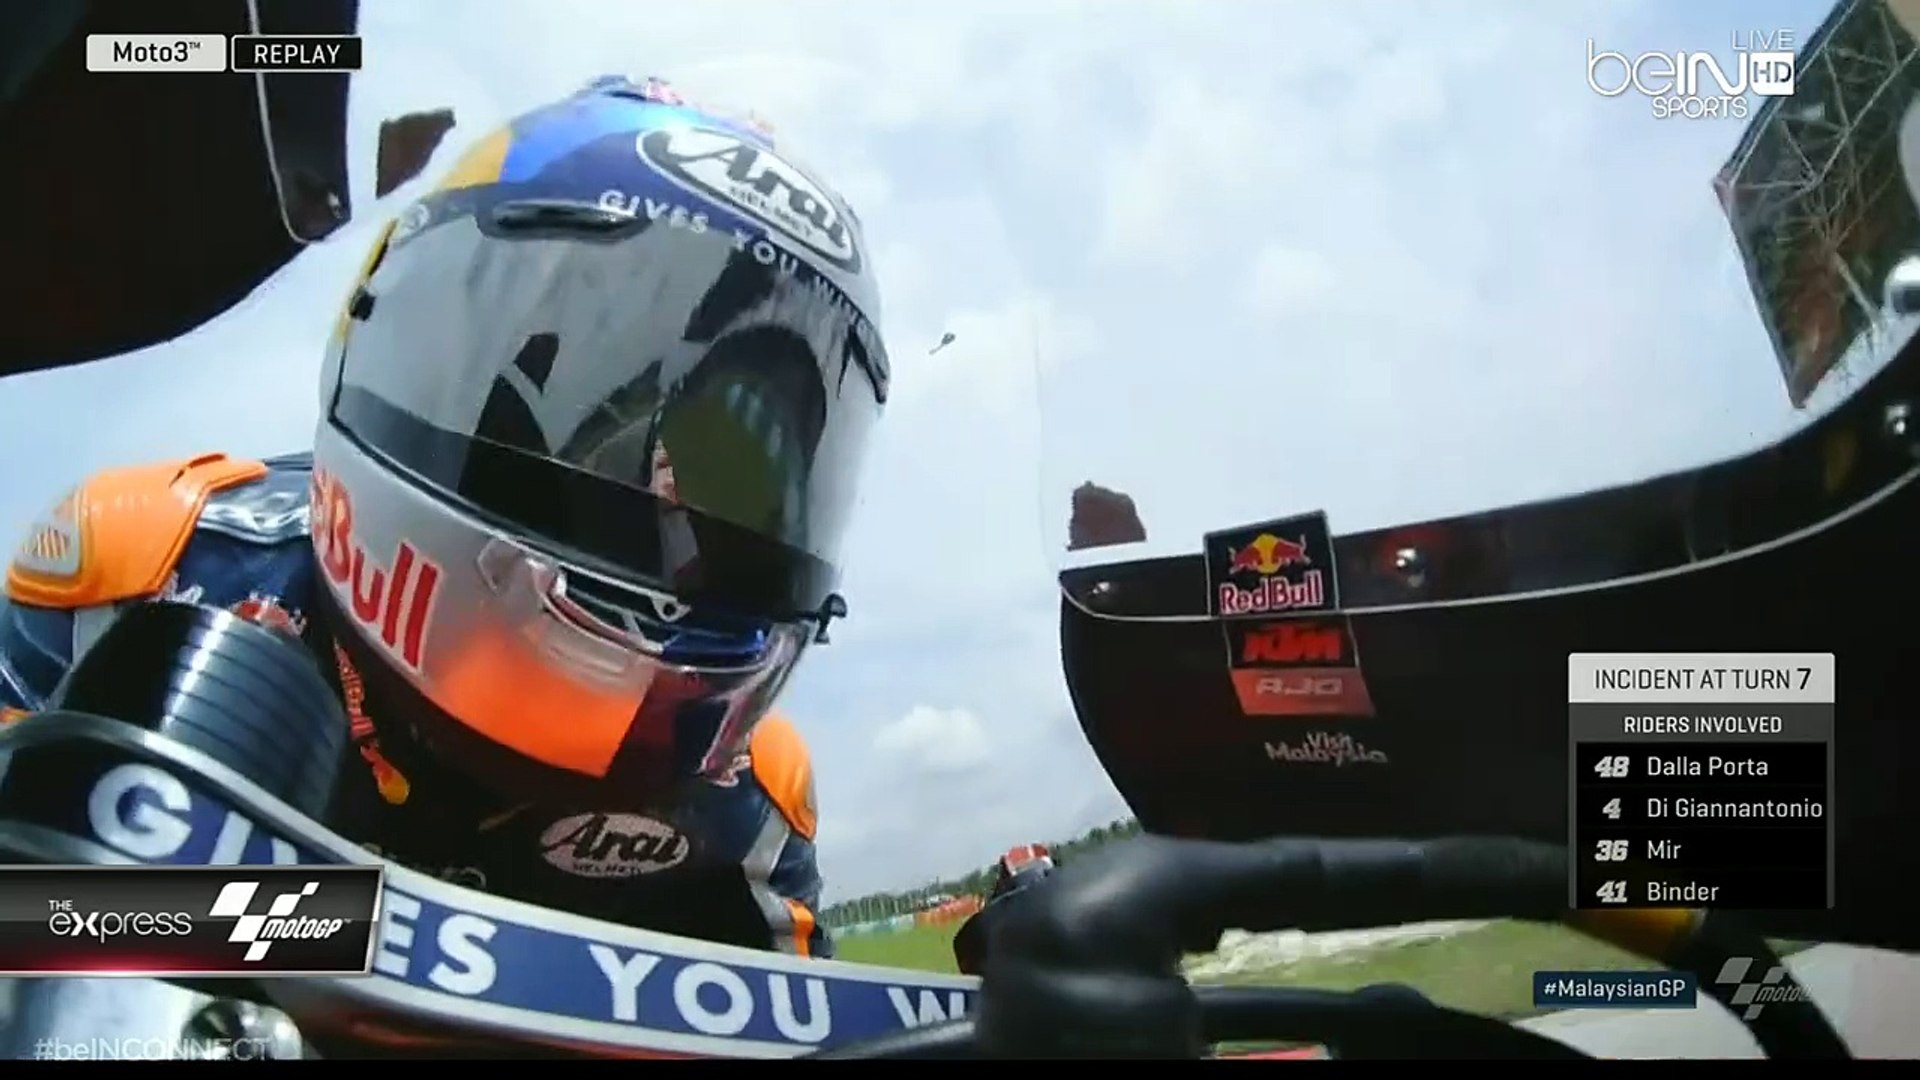 Malaysian GP Moto3 Moment of the Race